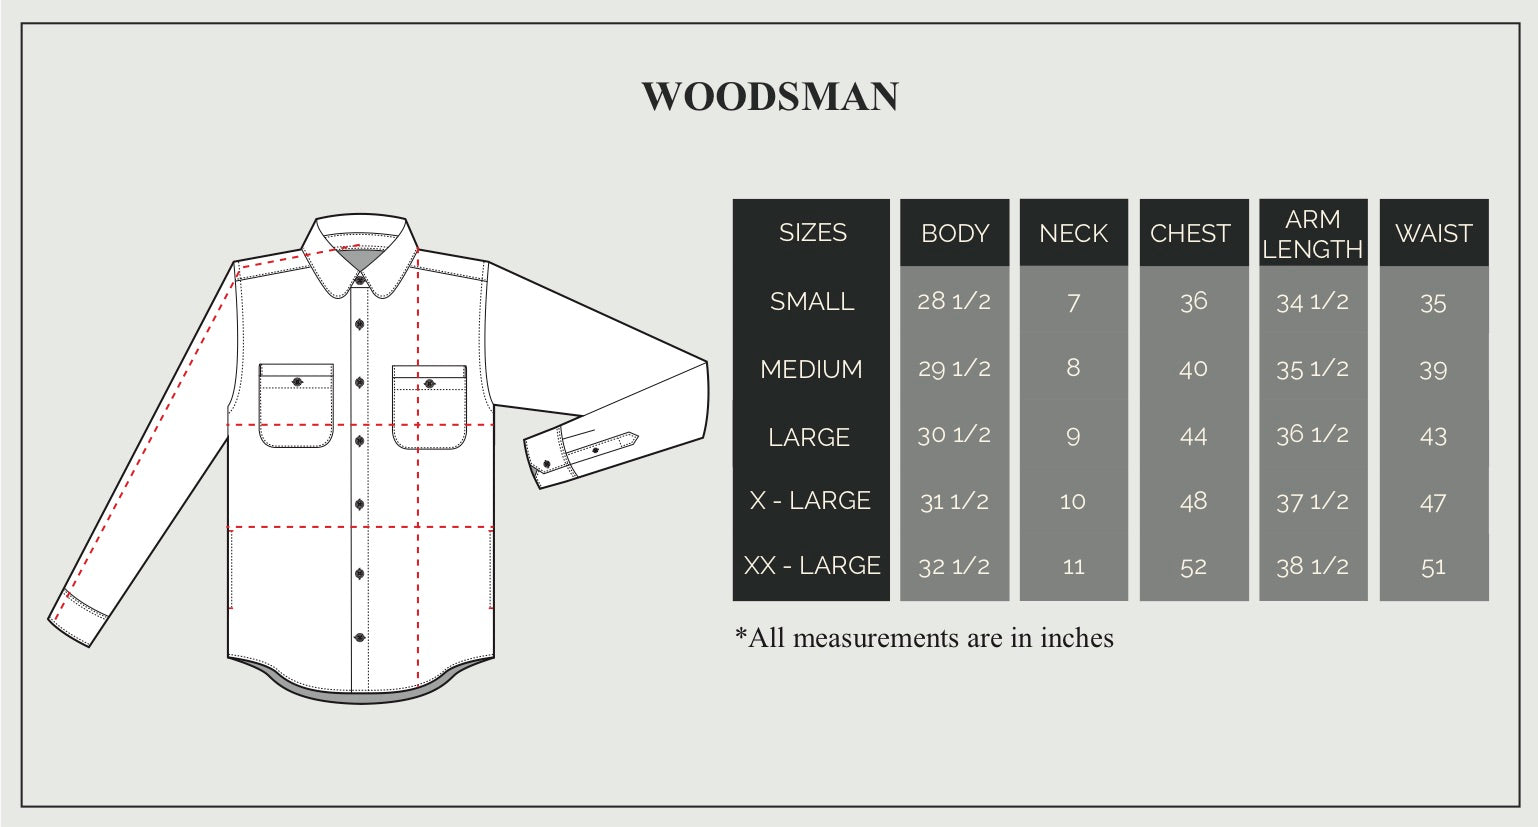 Woodsman Size Guide